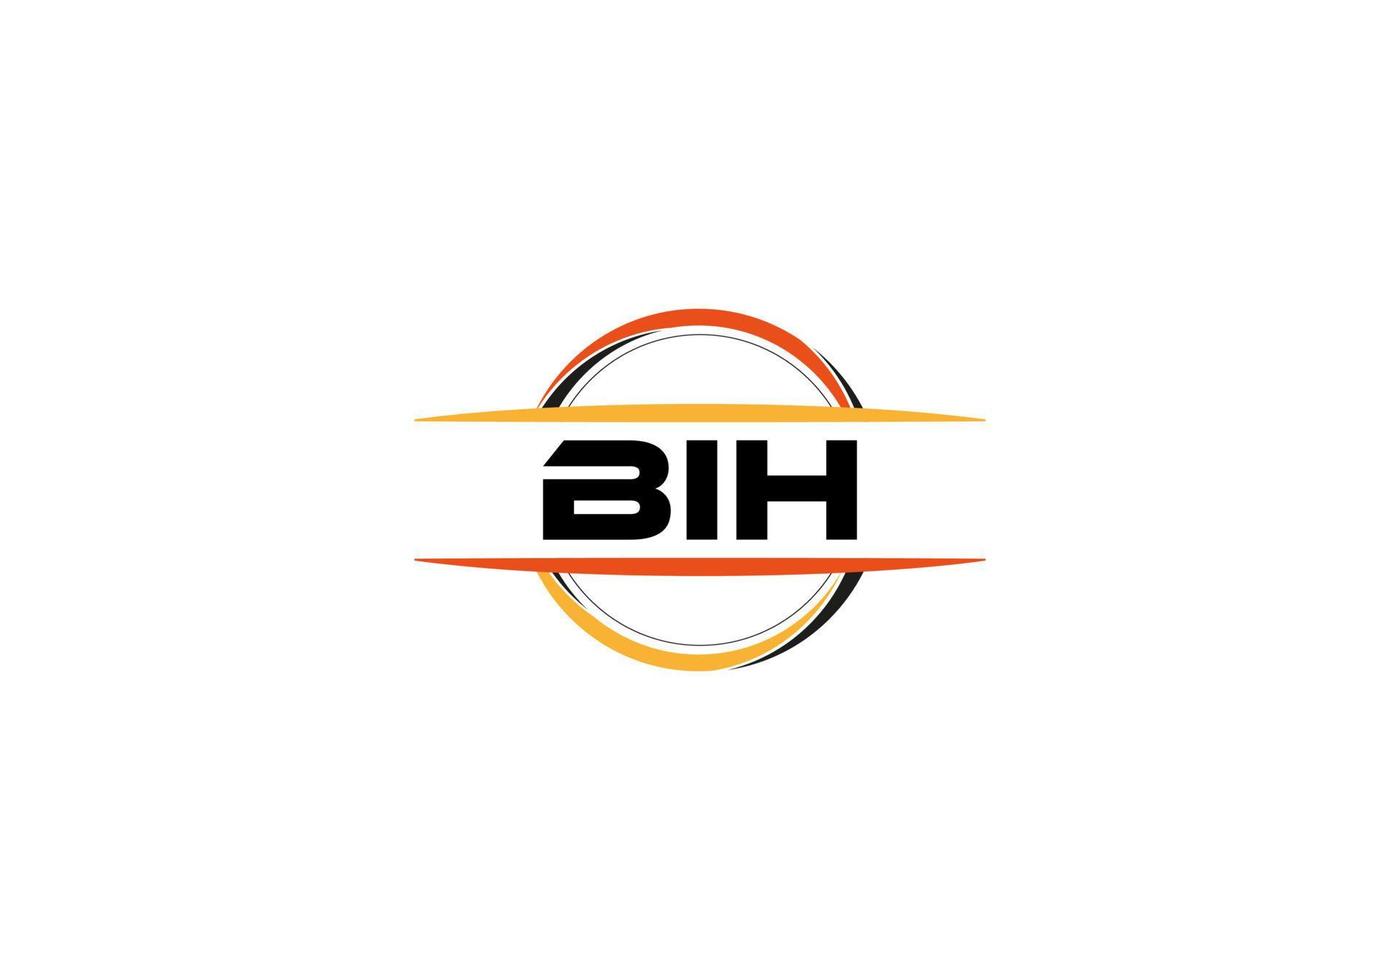 BIH letter royalty ellipse shape logo. BIH brush art logo. BIH logo for a company, business, and commercial use. vector